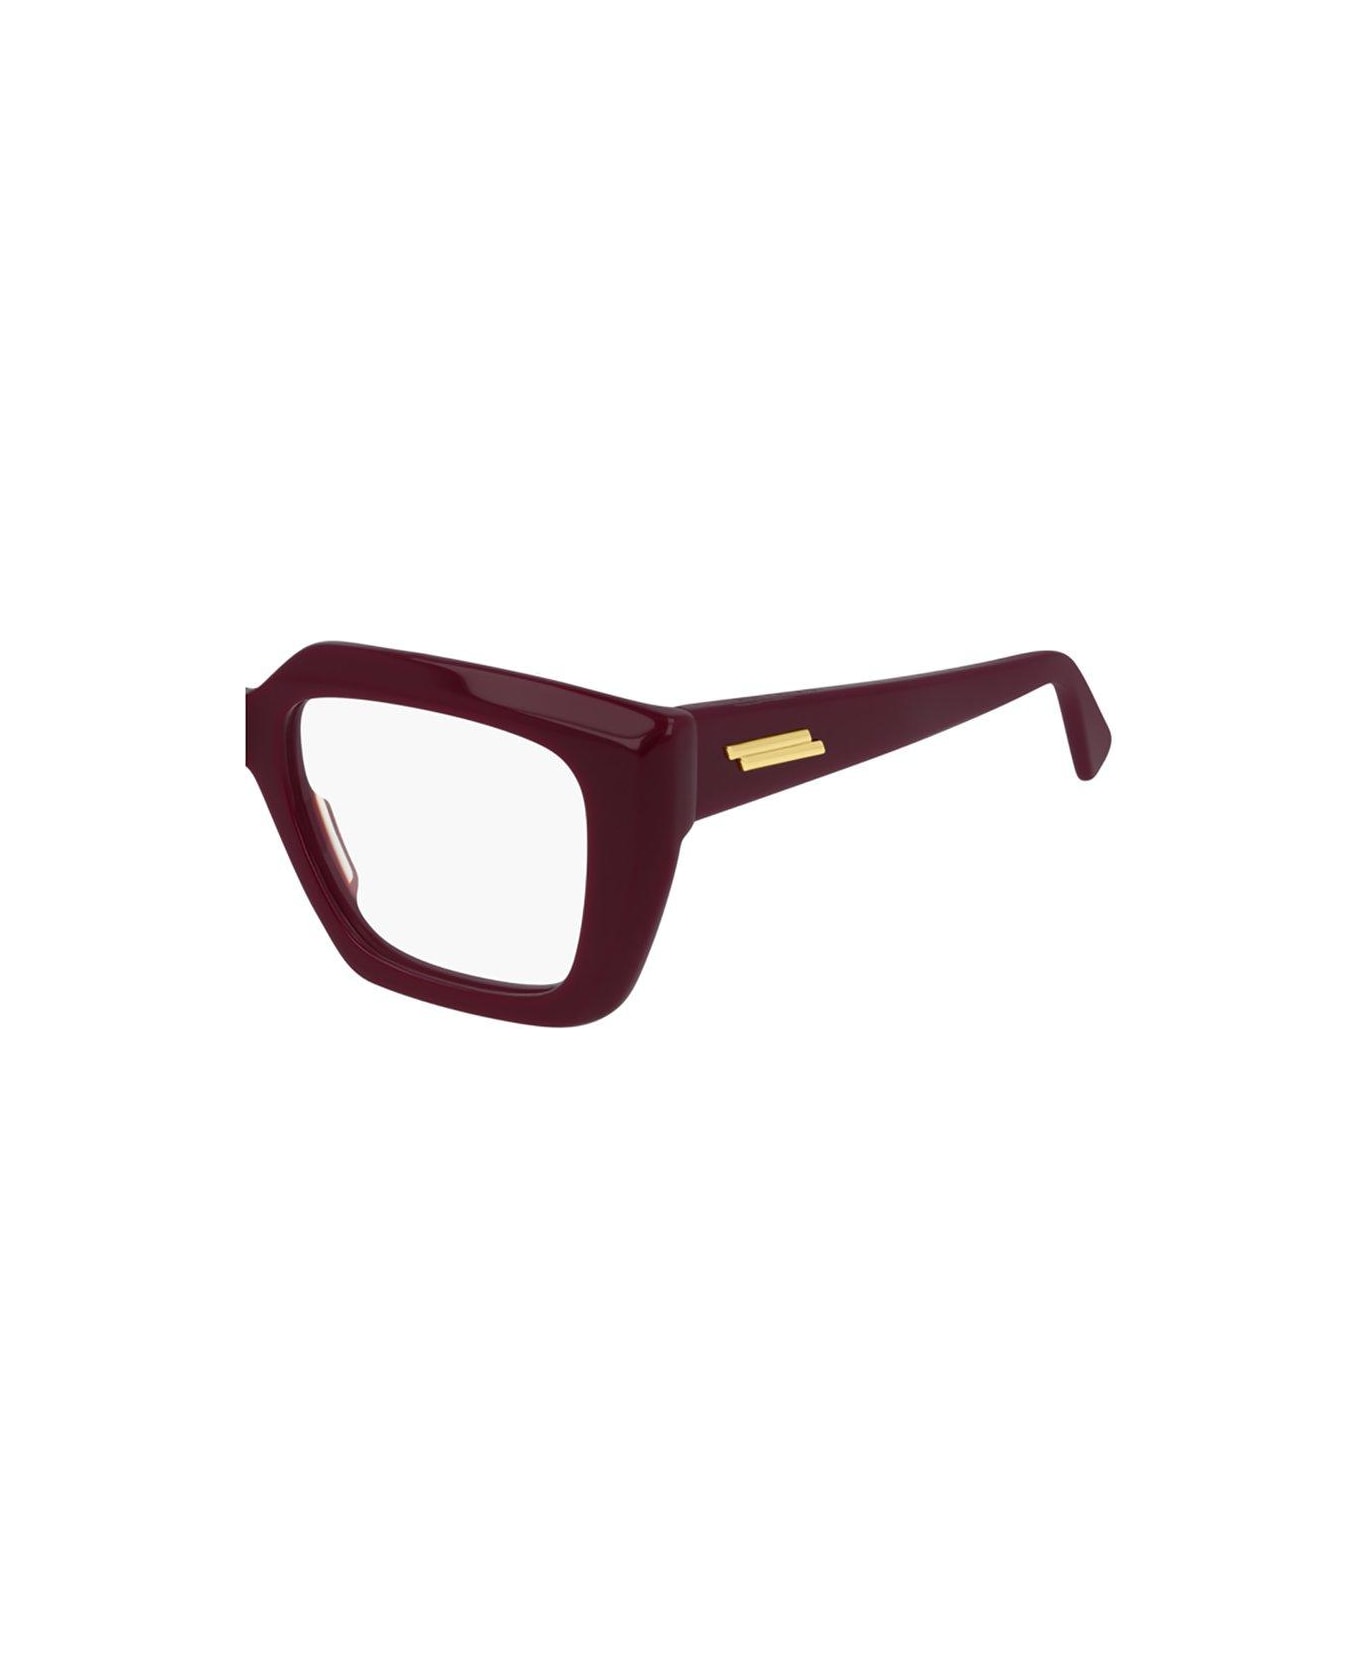 Bottega Veneta Eyewear Square Frame Glasses - 003 burgundy burgundy tra